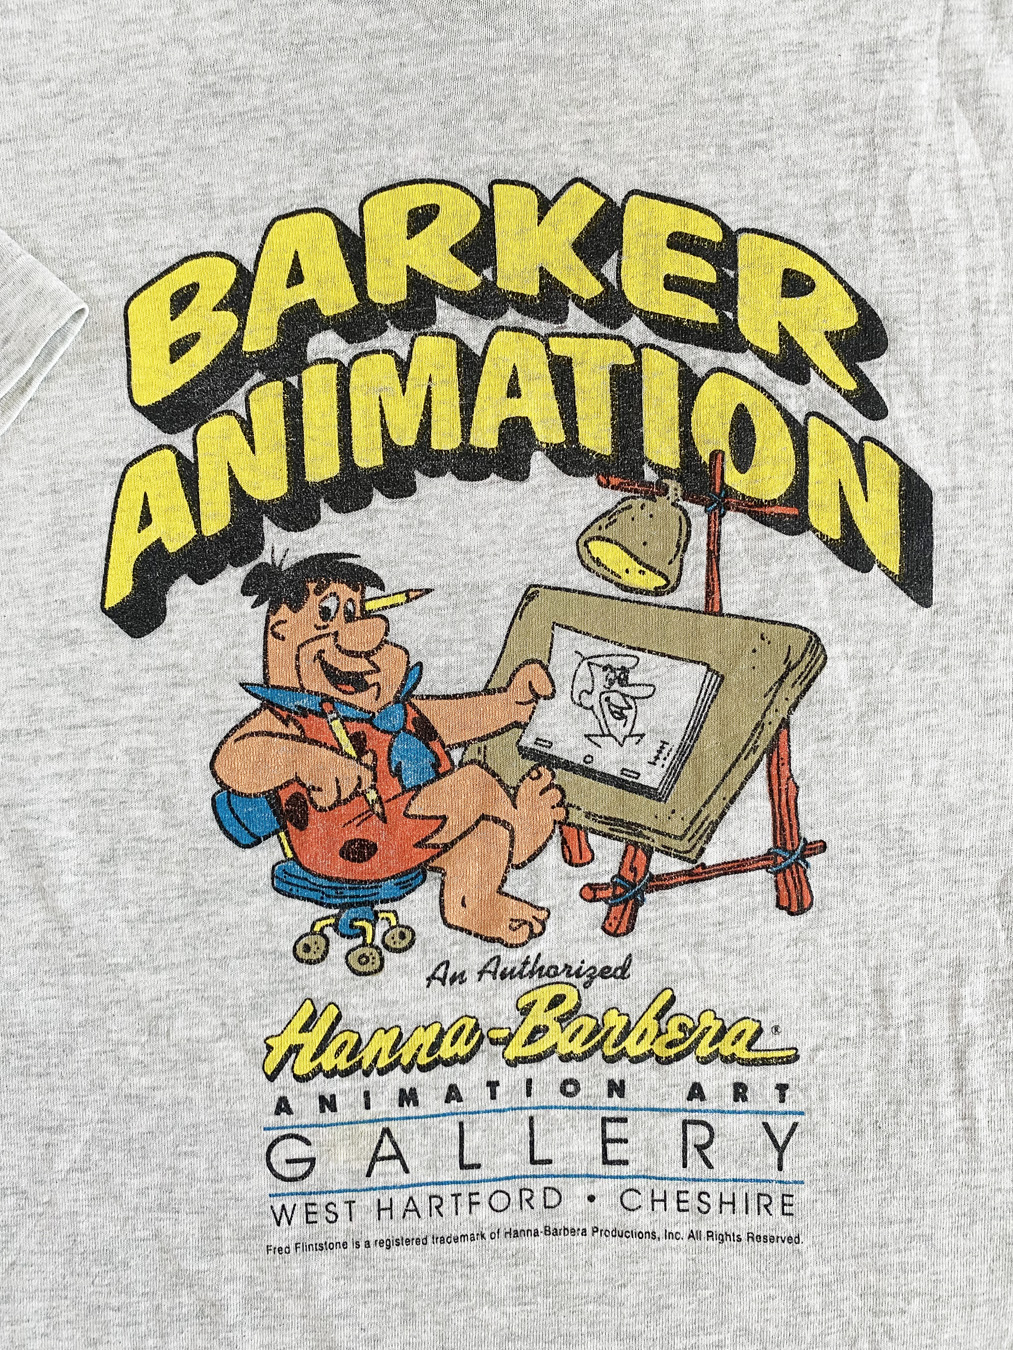 Flintstone Barker 90s Star T-Shirt Art Animation Hanna - Fred Vintage 5